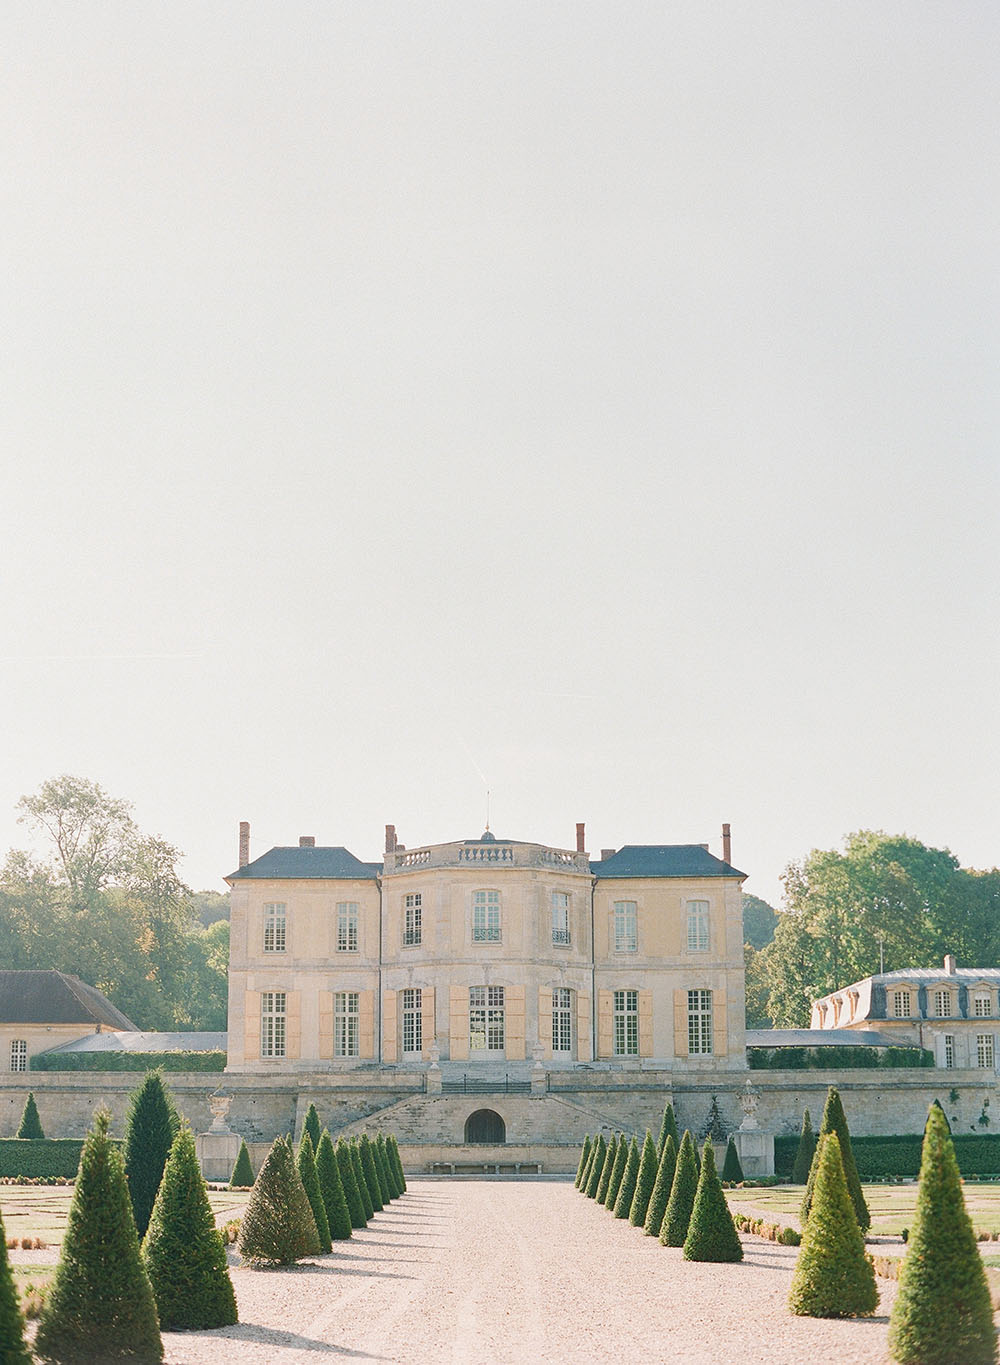 The gardens and exterior of Chateau de Villette just outside of Paris